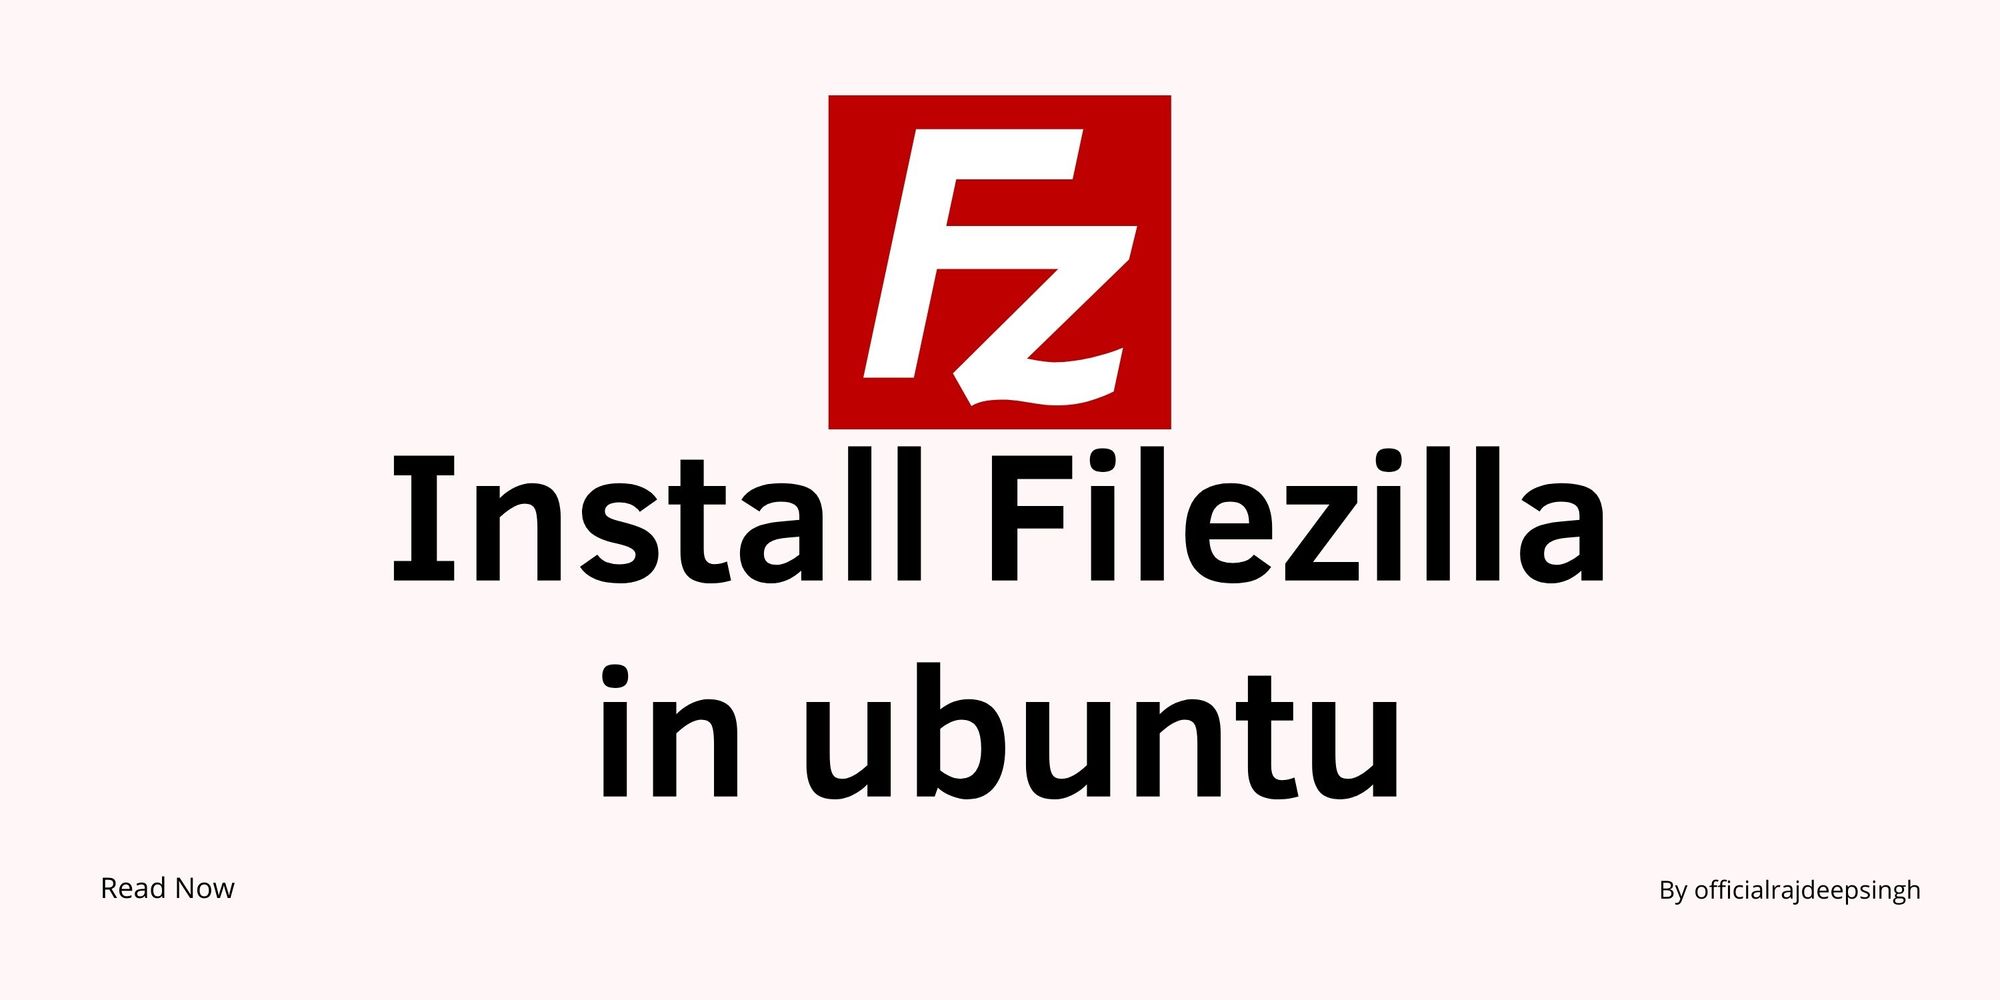 How to install Filezilla in ubuntu?